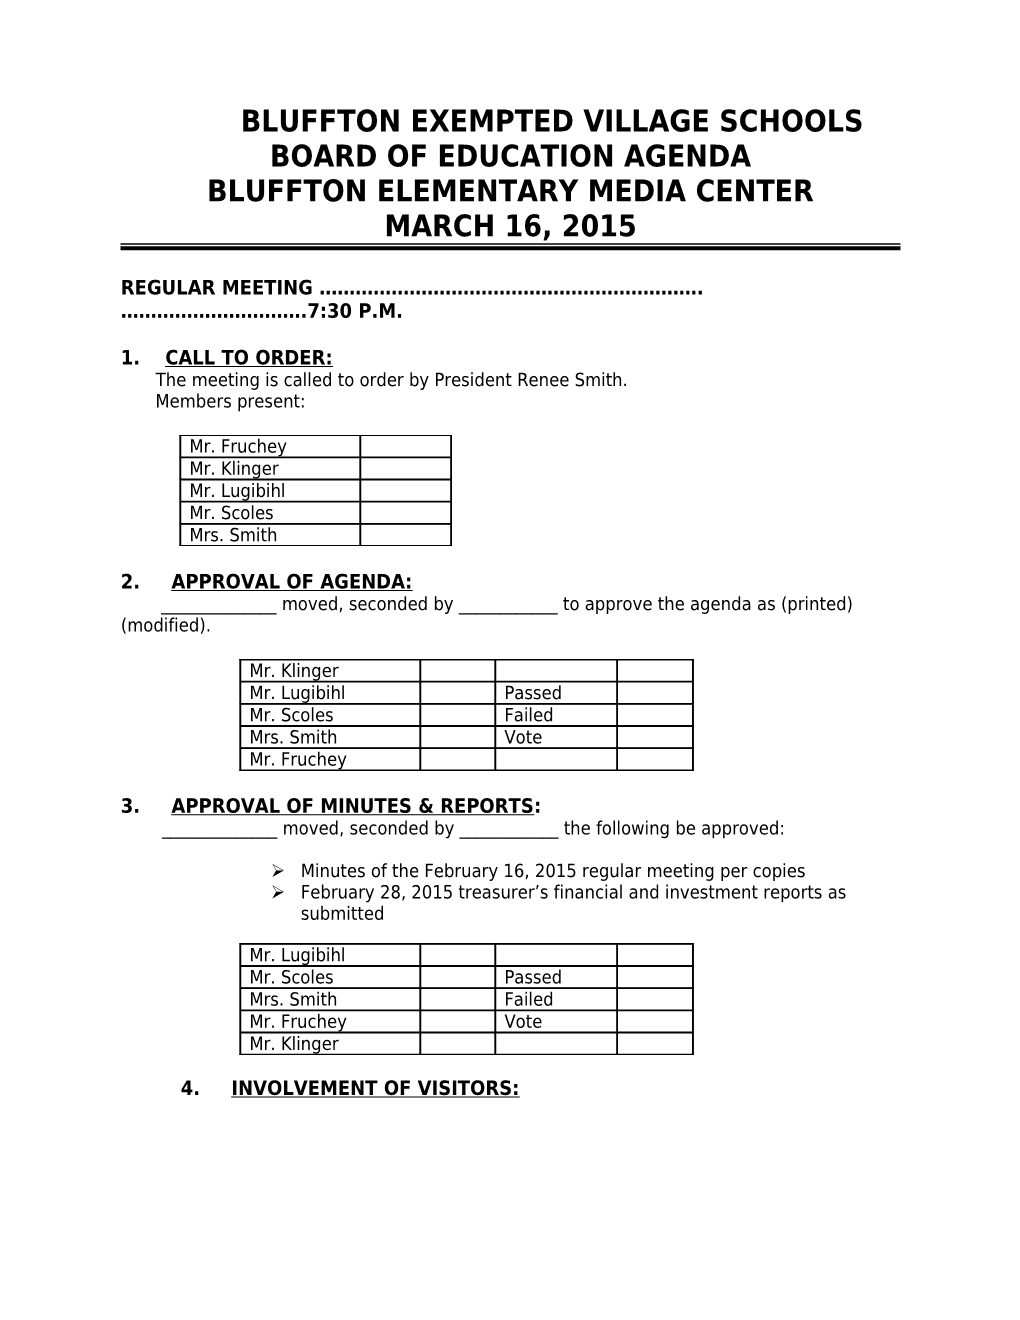 Bluffton Exempted Village Schools s1